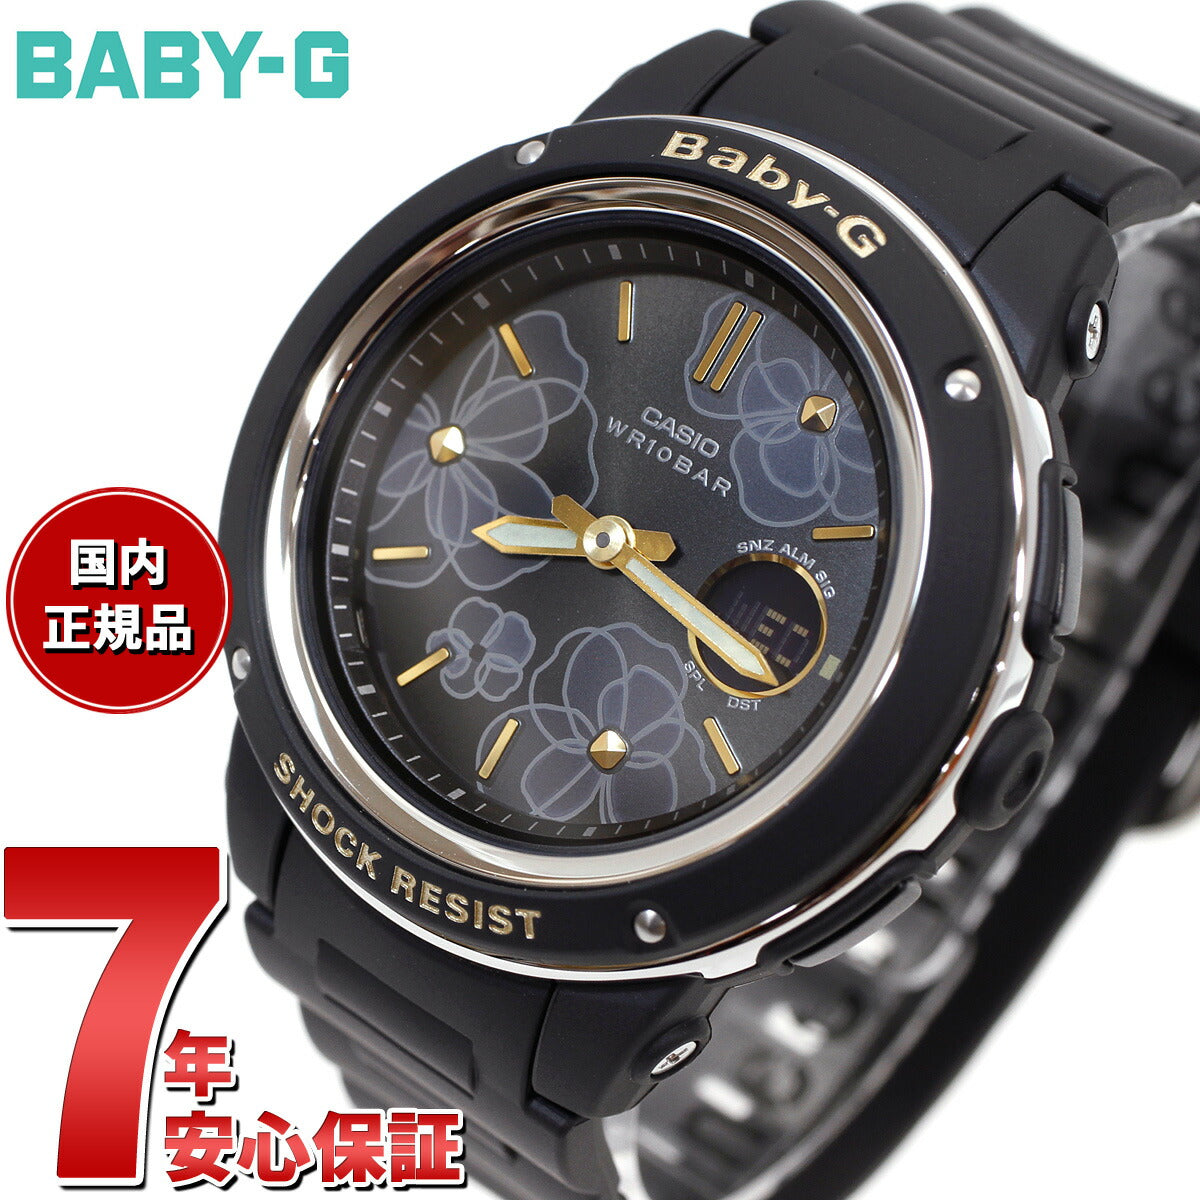 BABY-G カシオ ベビーG レディース 腕時計 フローラル ダイアル 花柄 BGA-150FL-1AJF